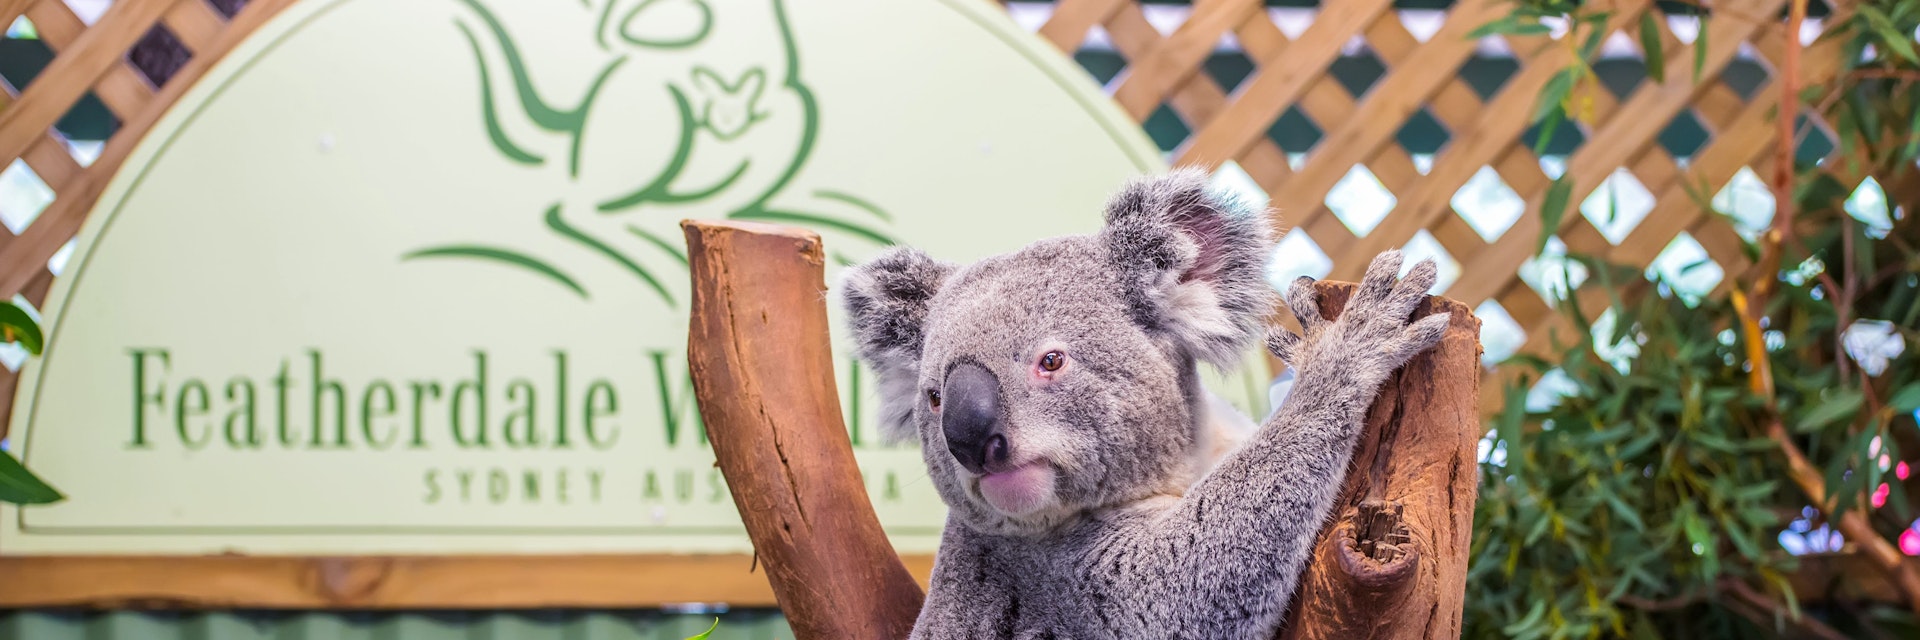 DOONSIDE, AUSTRALIA - NOVEMBER 10, 2014: Cute Koala in Featherdale Wildlife Park, Doonside, Australia.; Shutterstock ID 386029678; your: Bridget Brown; gl: 65050; netsuite: Online Editorial; full: POI Image Update